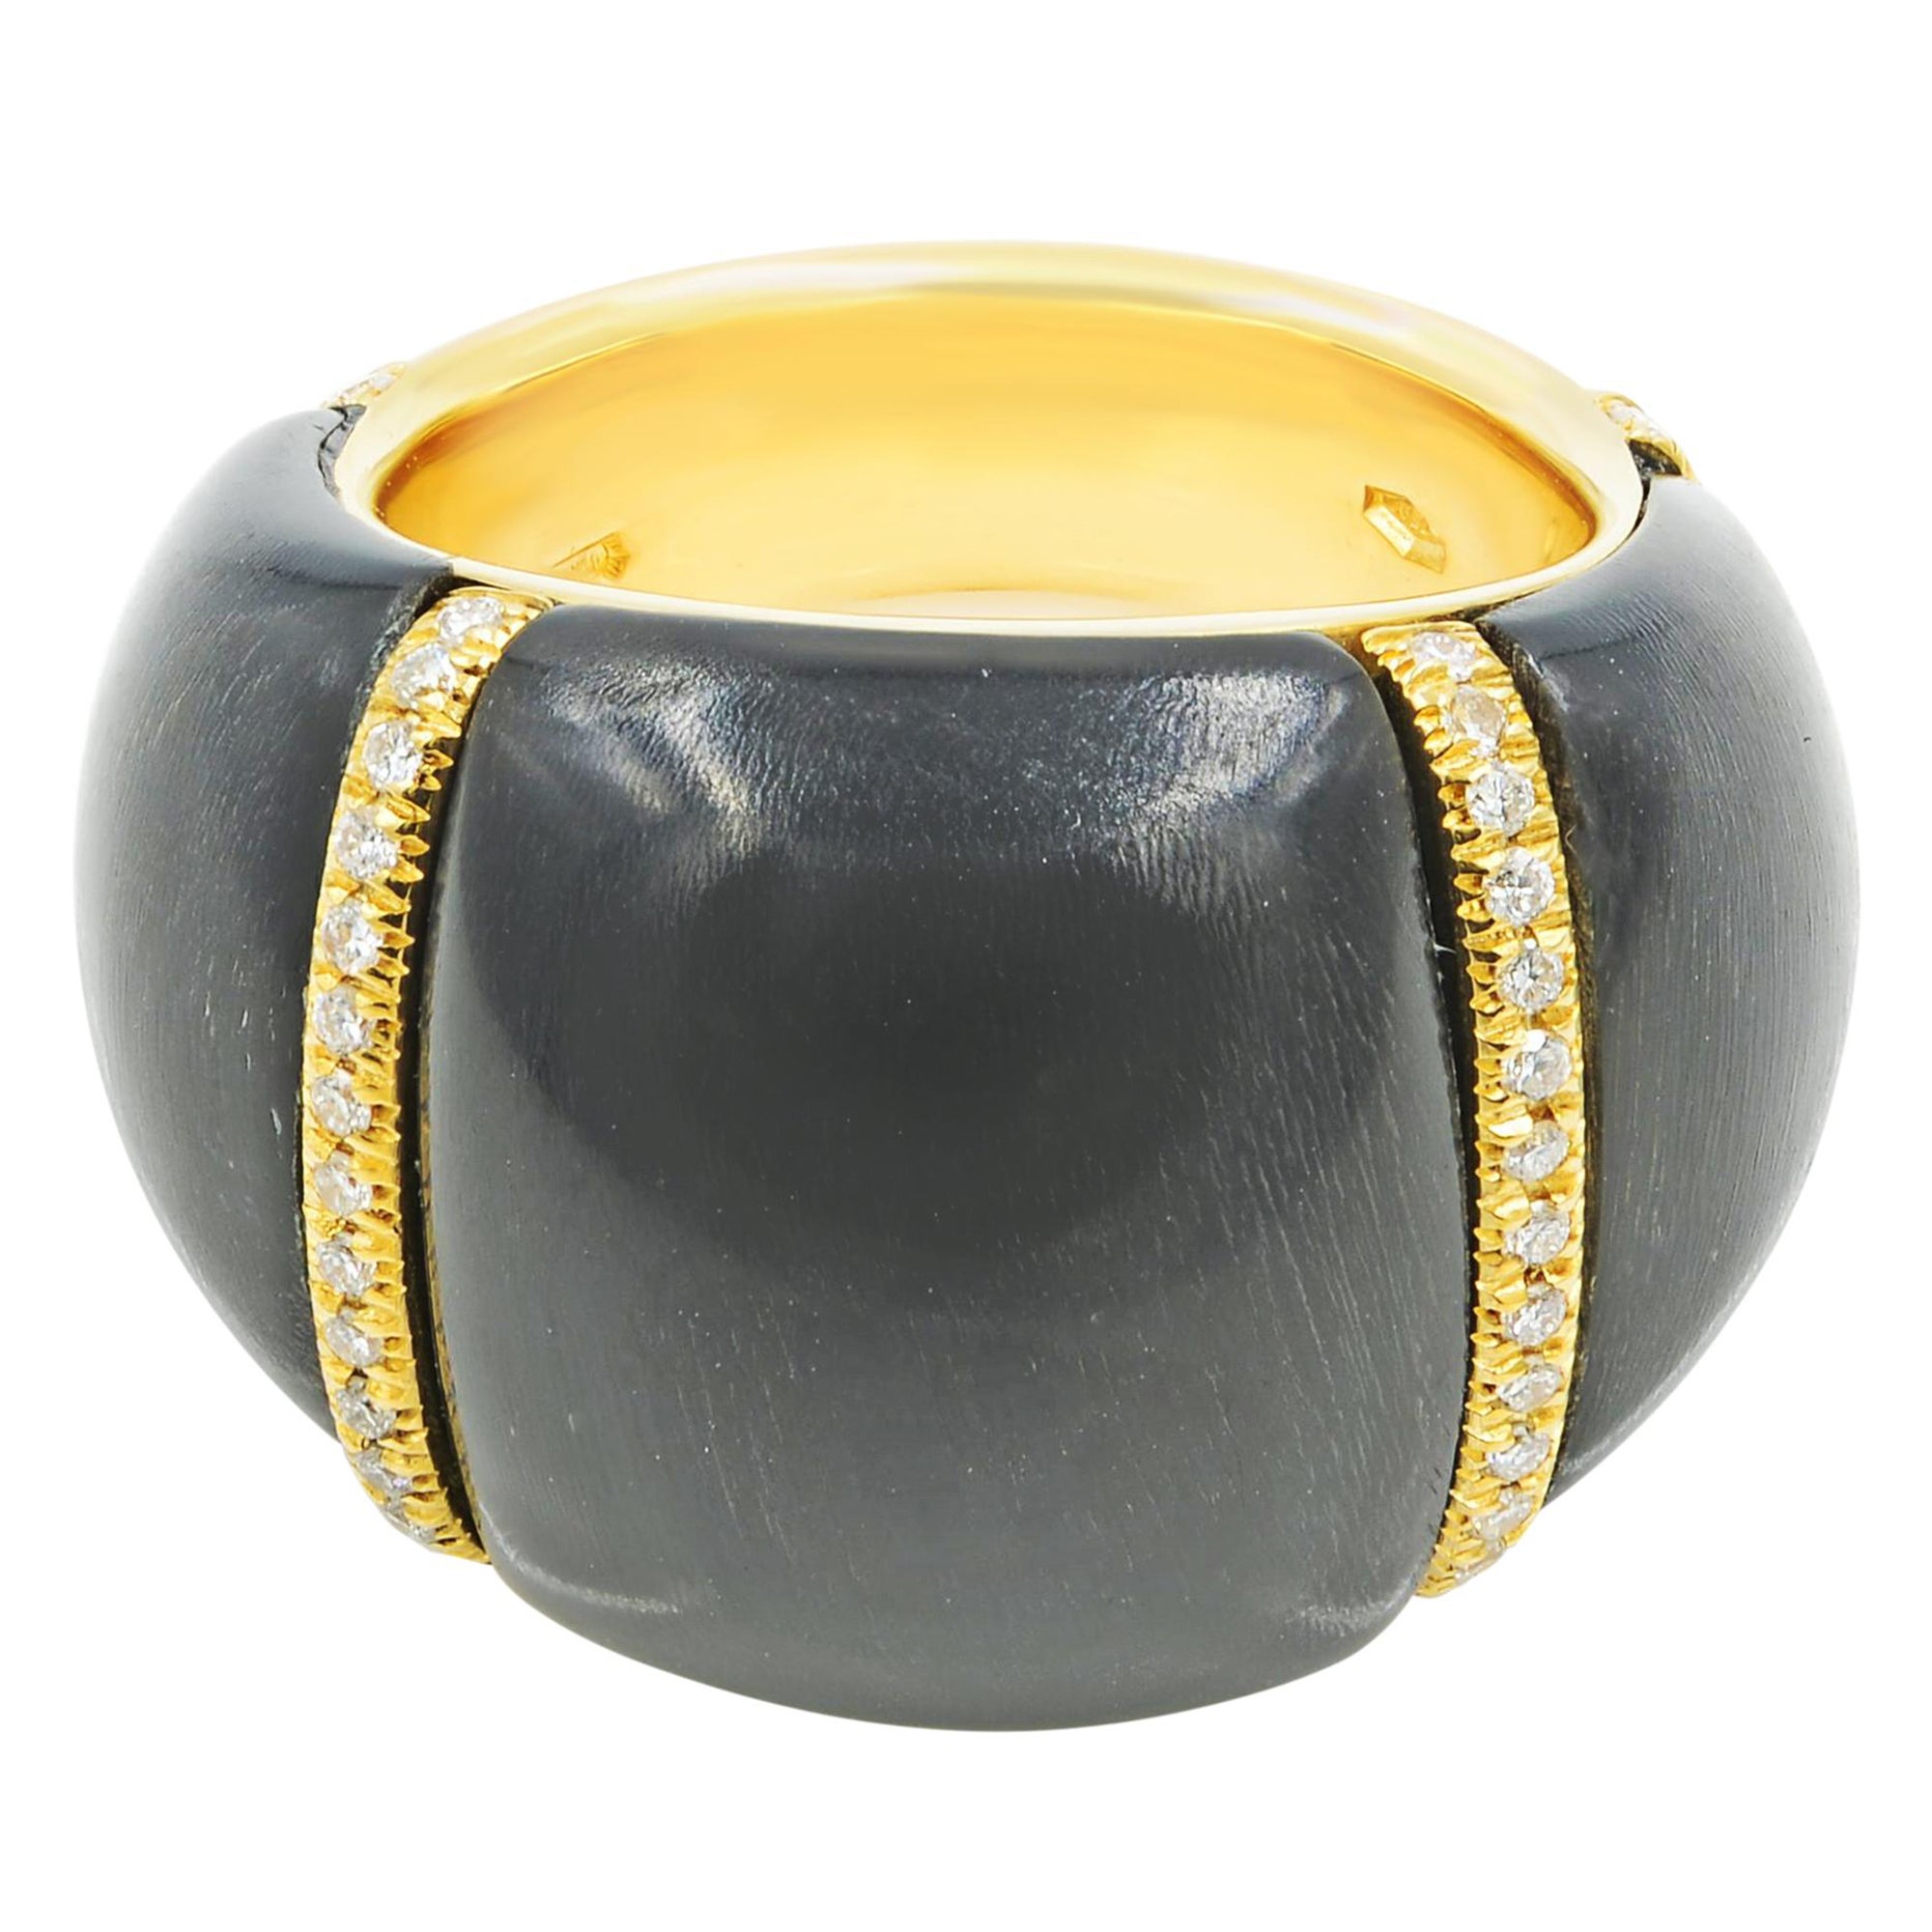 Chantecler Black Onyx Diamond Dome Shaped Ring 18k Yellow Gold 0.50cttw Size 6.5